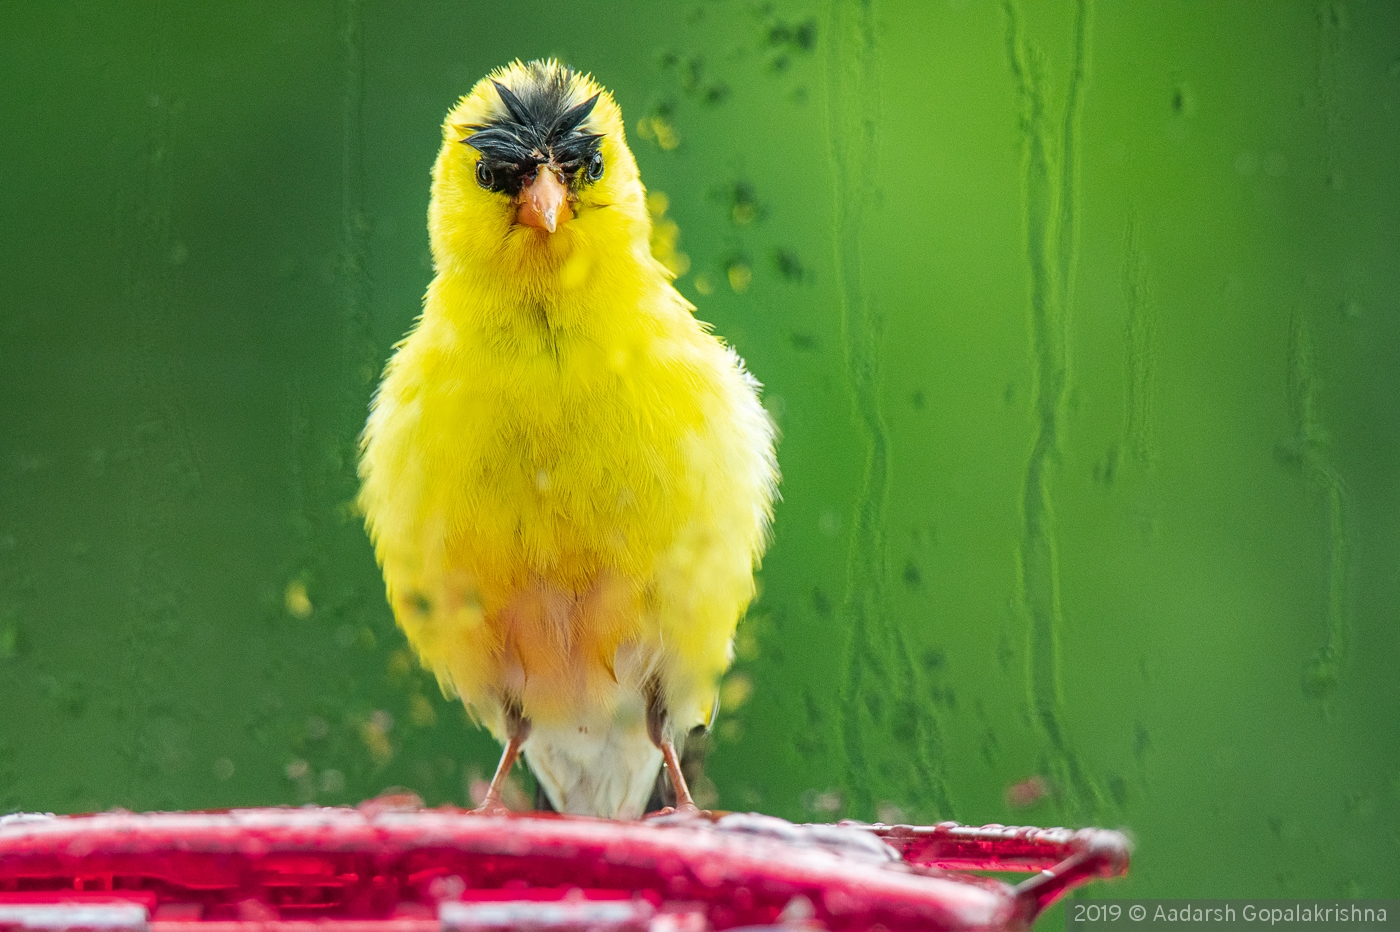 Talk about a bad hair day ... Male Goldfinch in Rain by Aadarsh Gopalakrishna